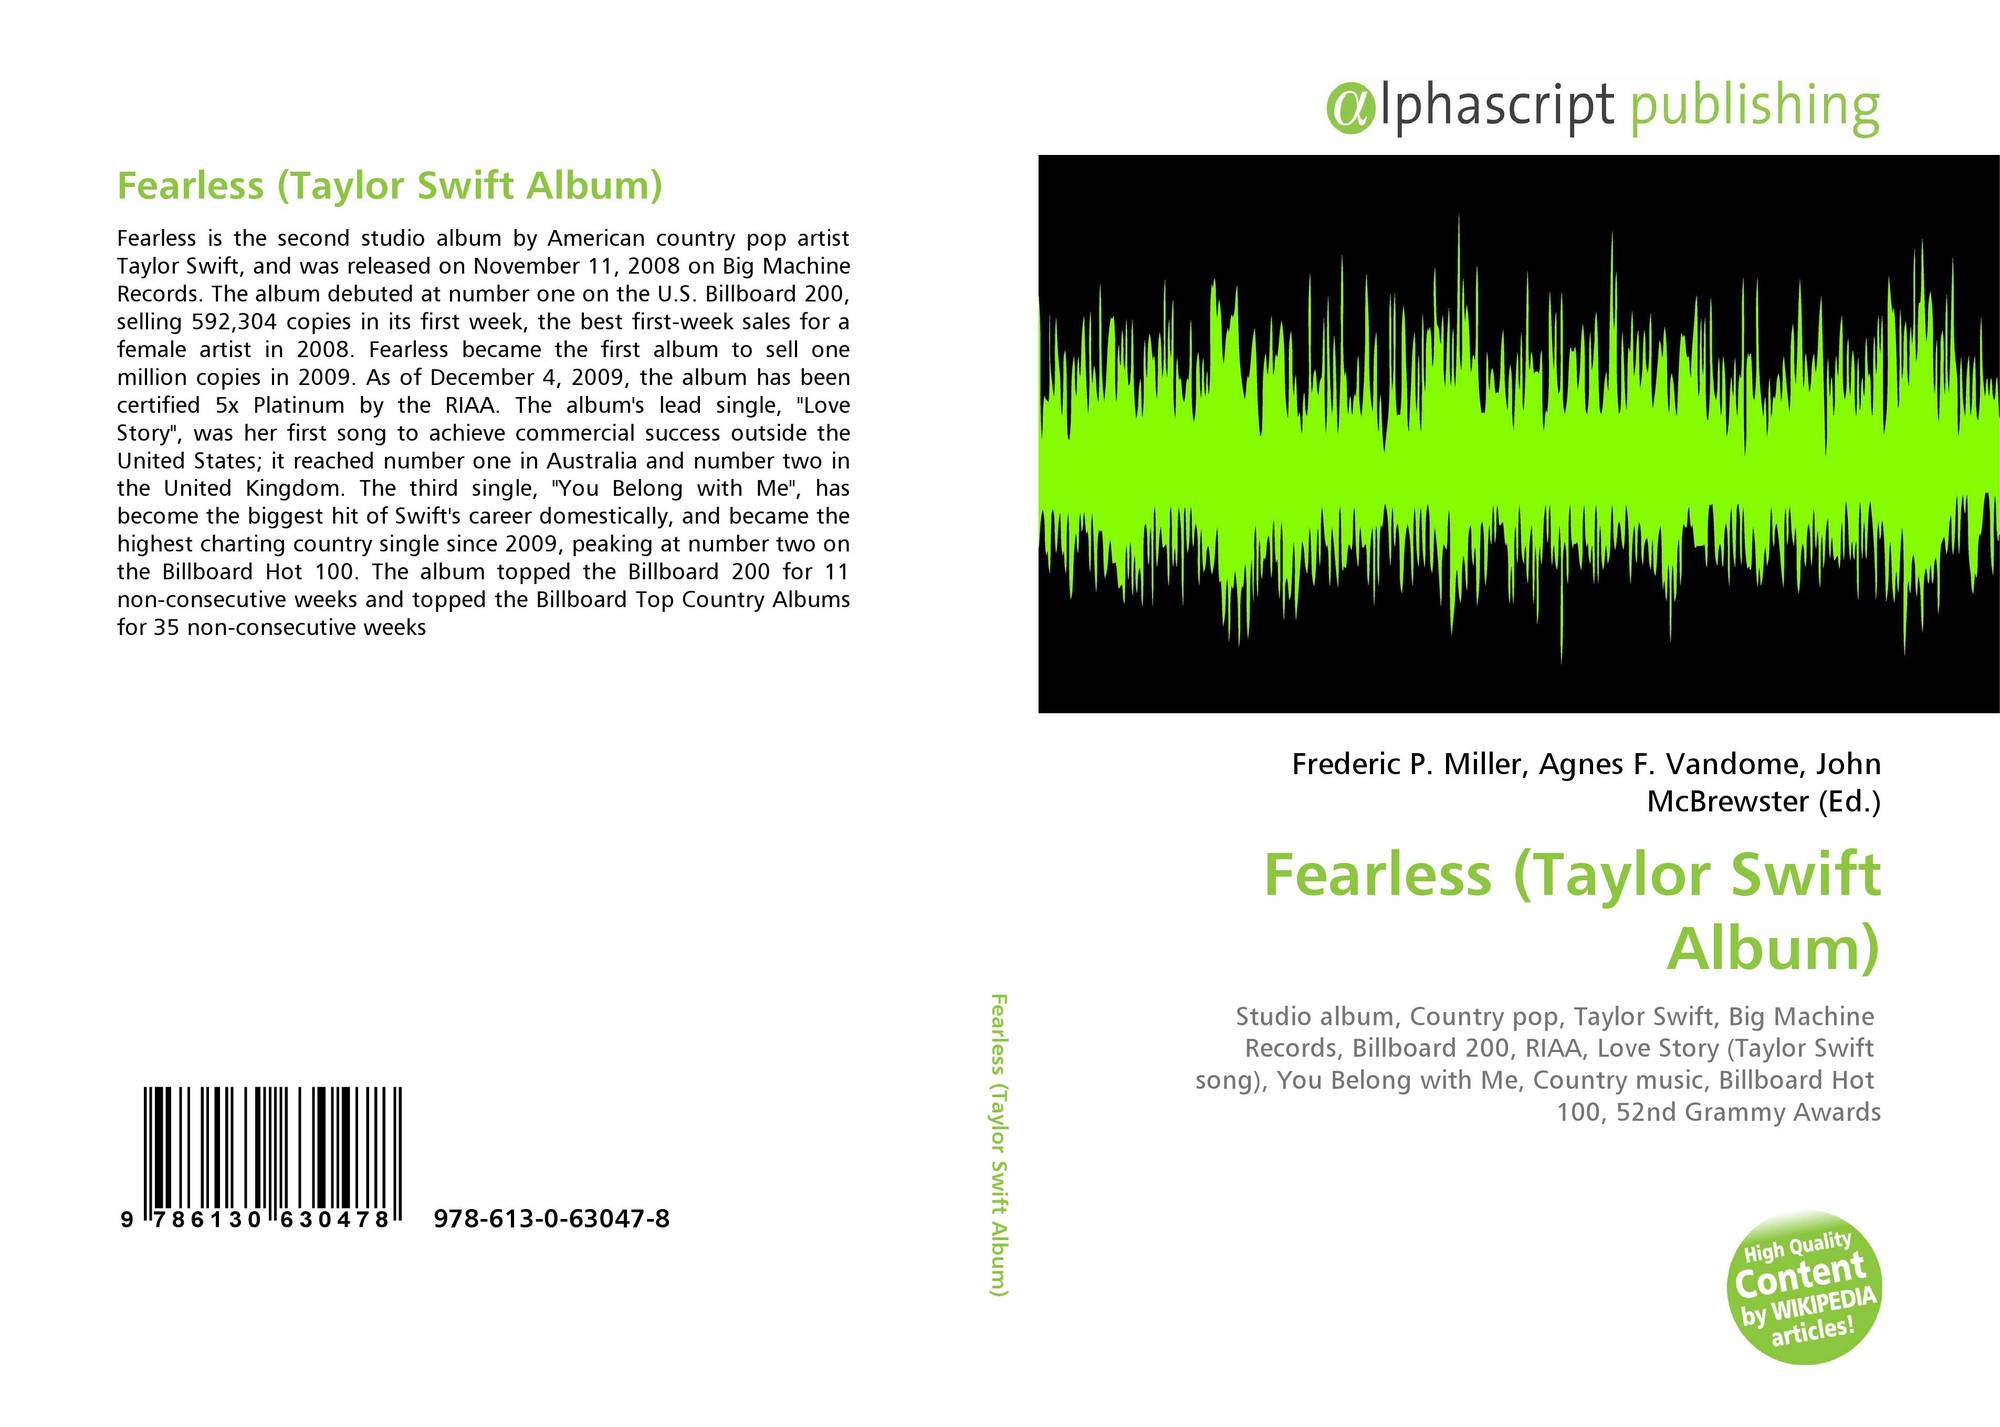 Fearless Taylor Swift Album 978 613 0 63047 8 6130630476